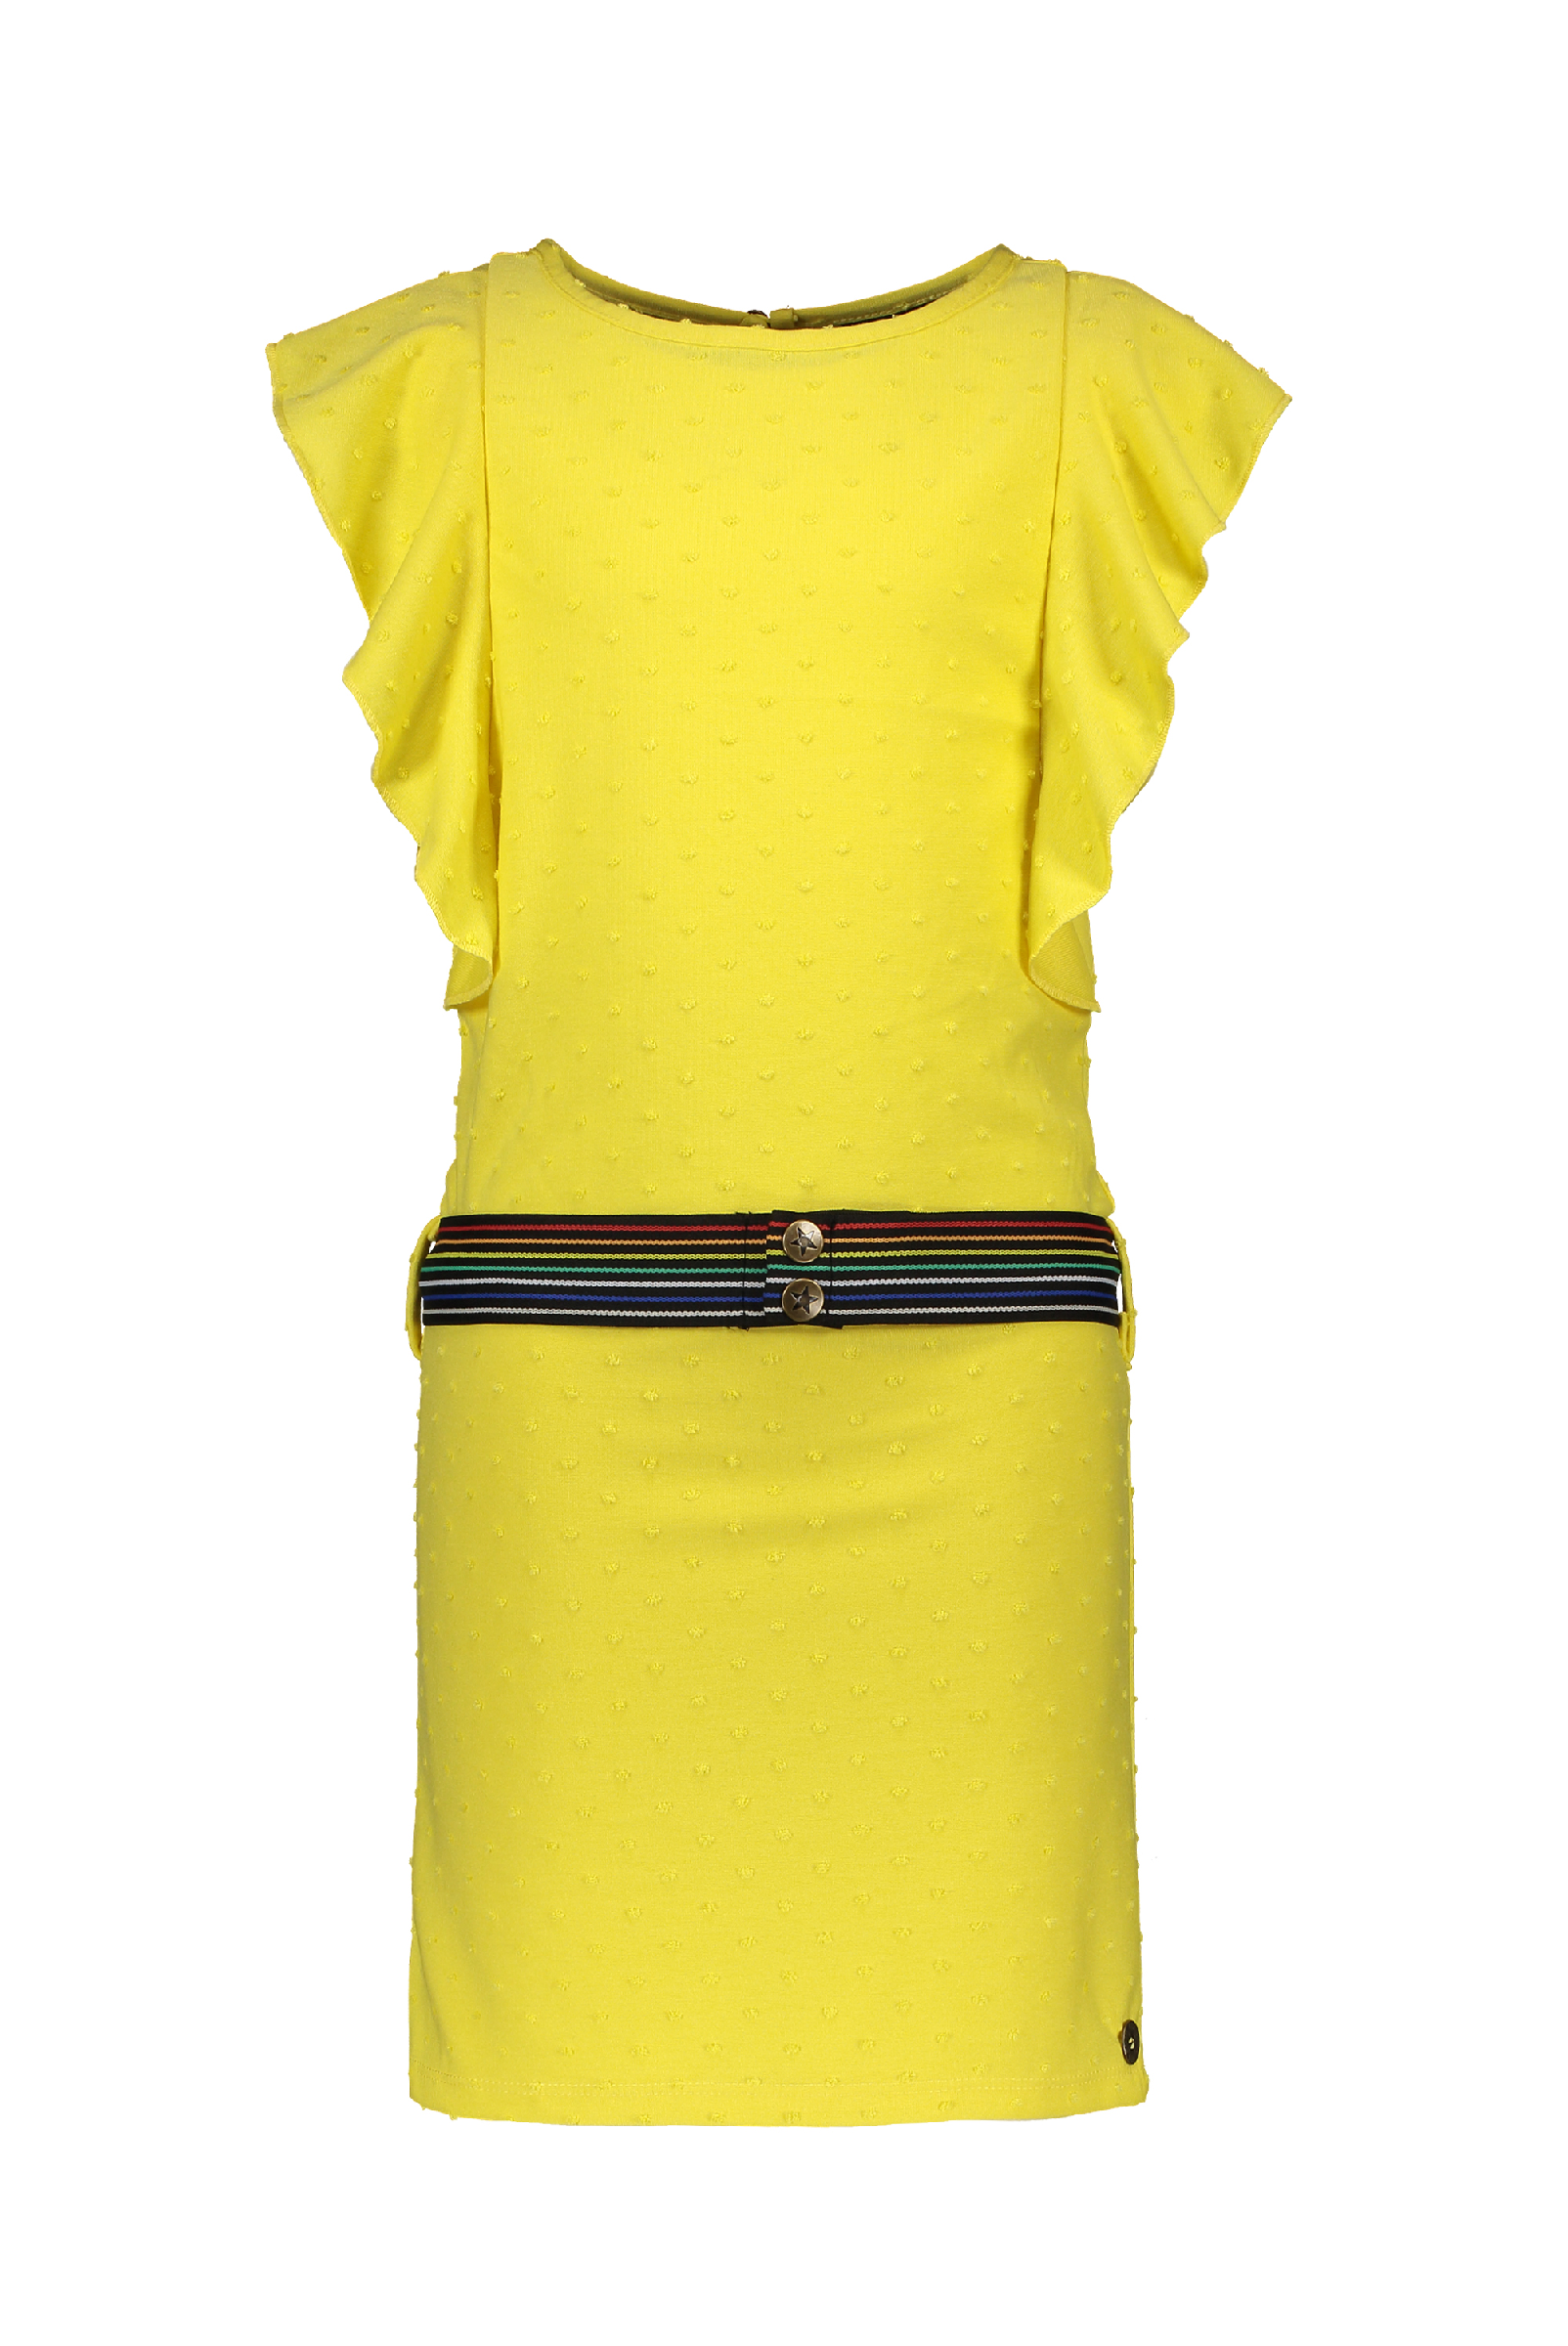 Meisjes Flo girls viscose dot ruffle dress loose belt van Flo in de kleur Yellow in maat 152.